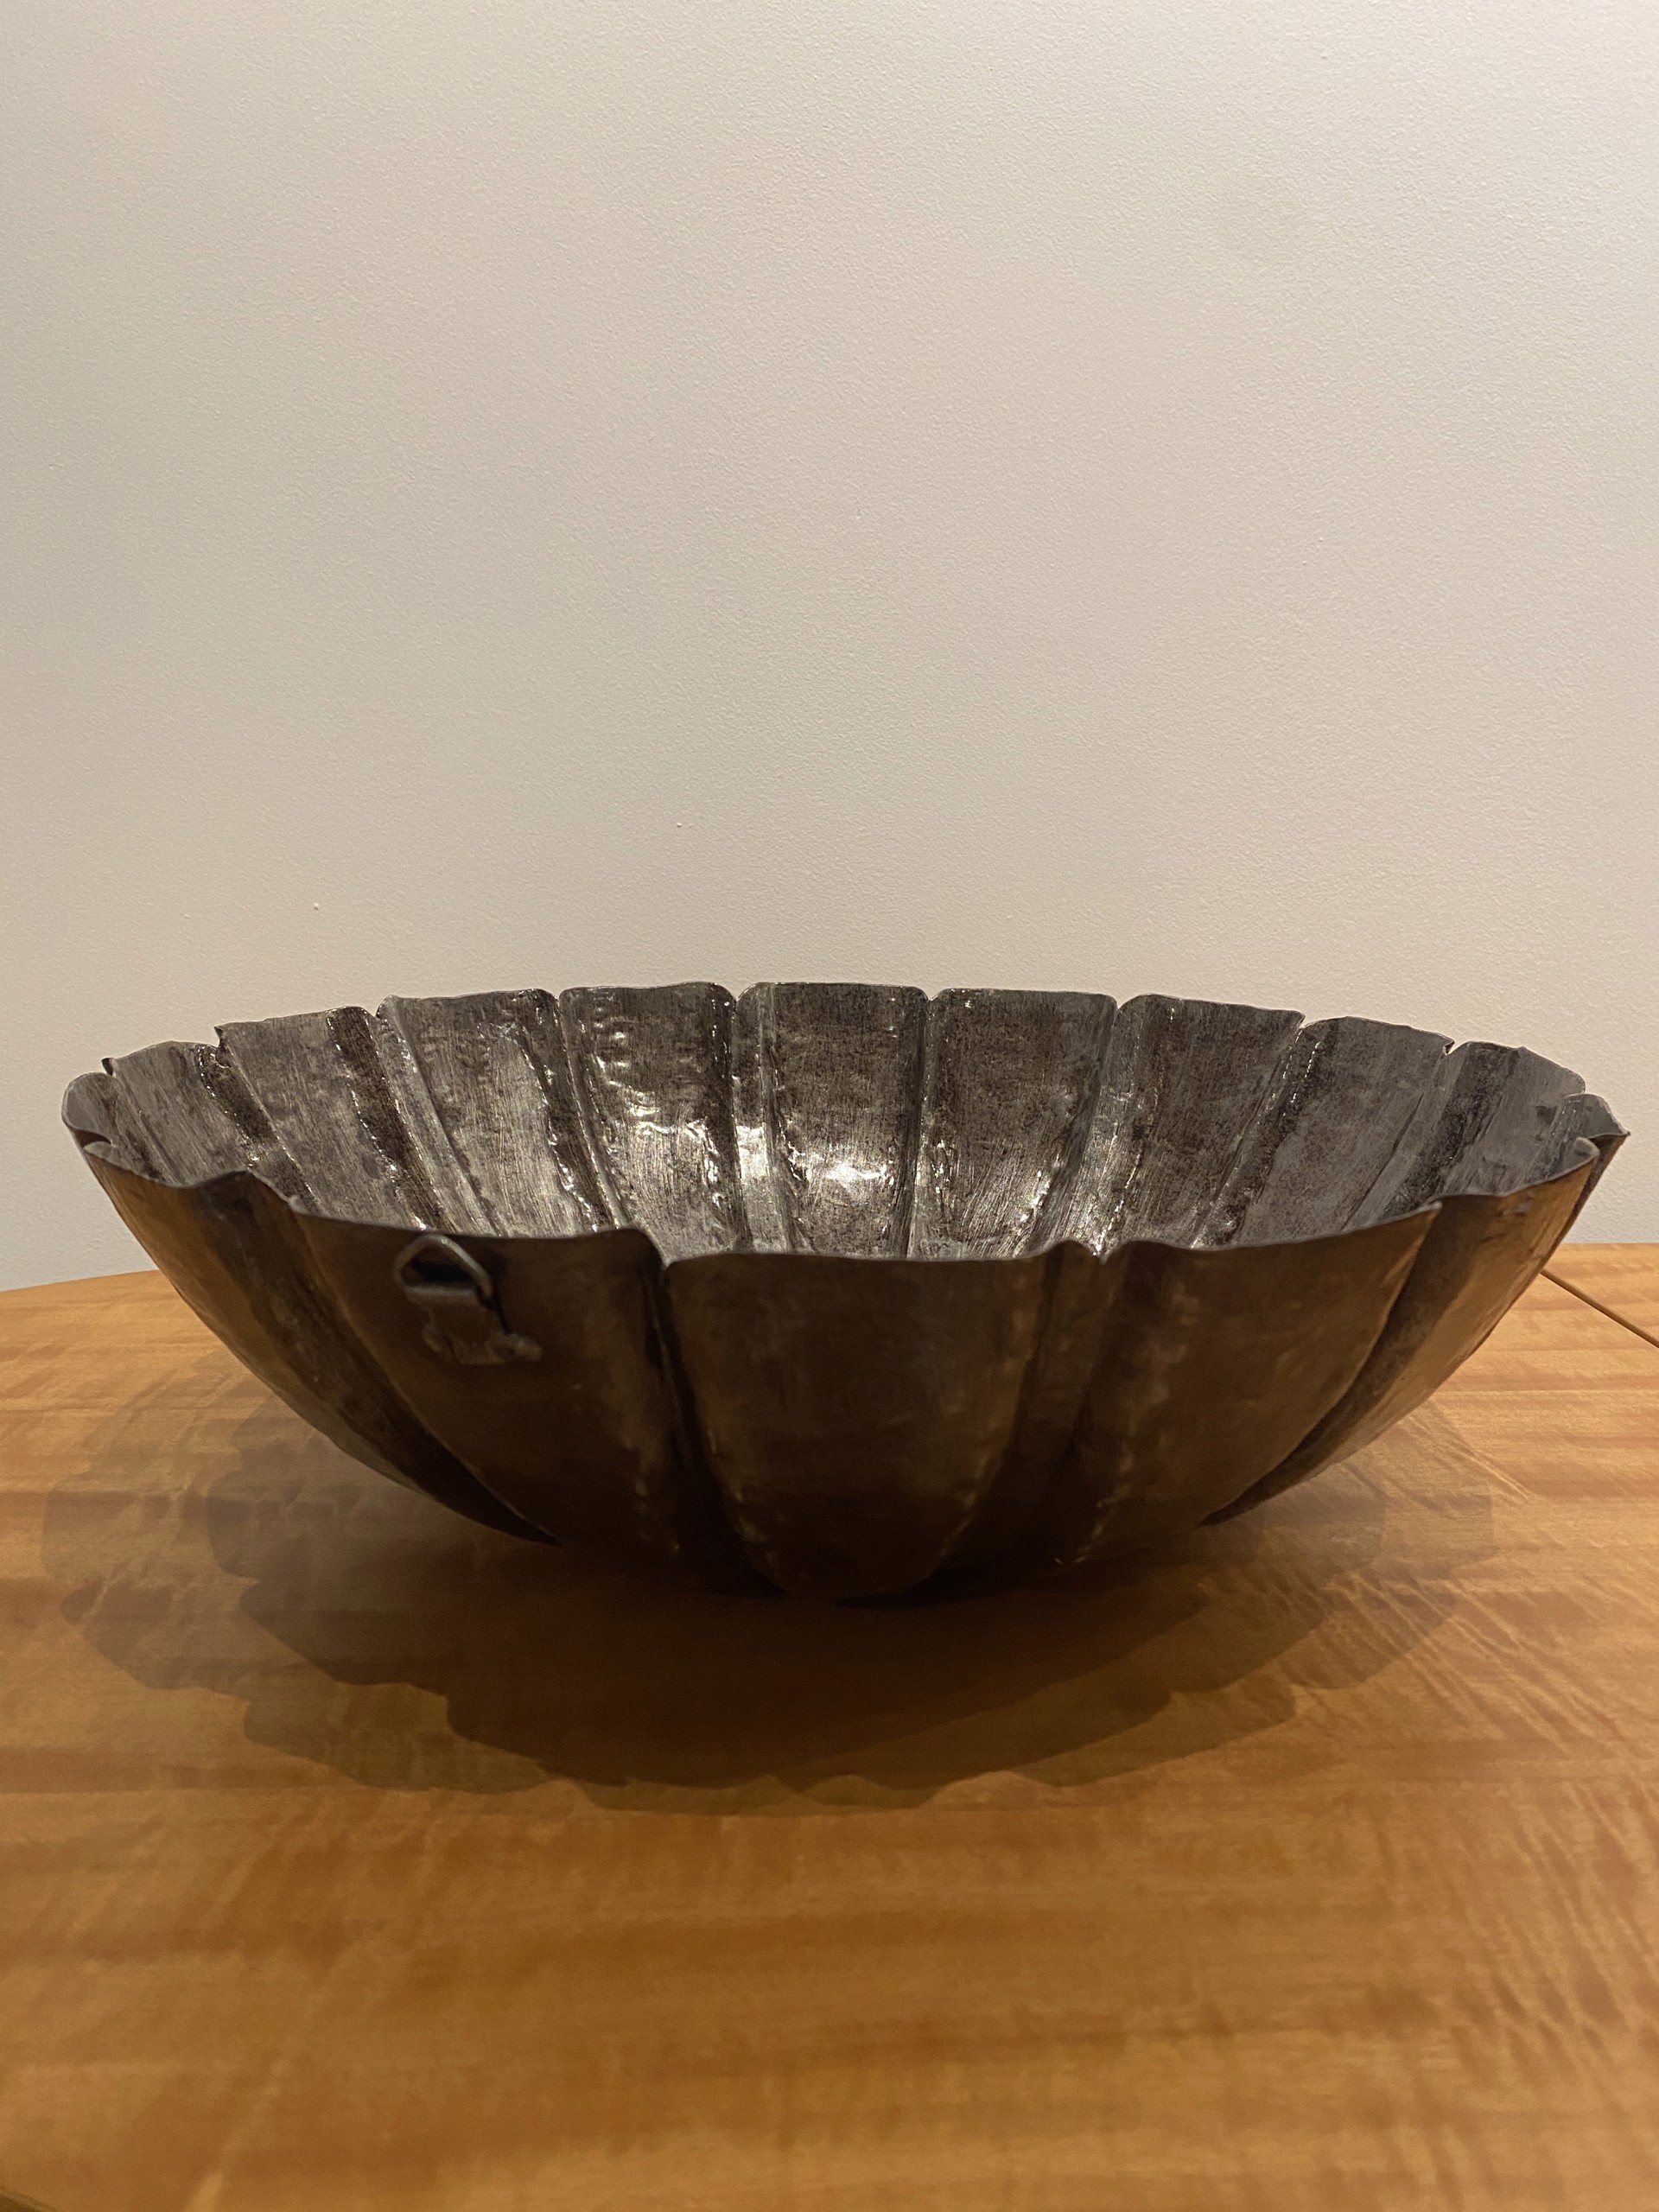 Lotus bowl by Josnel Bruno